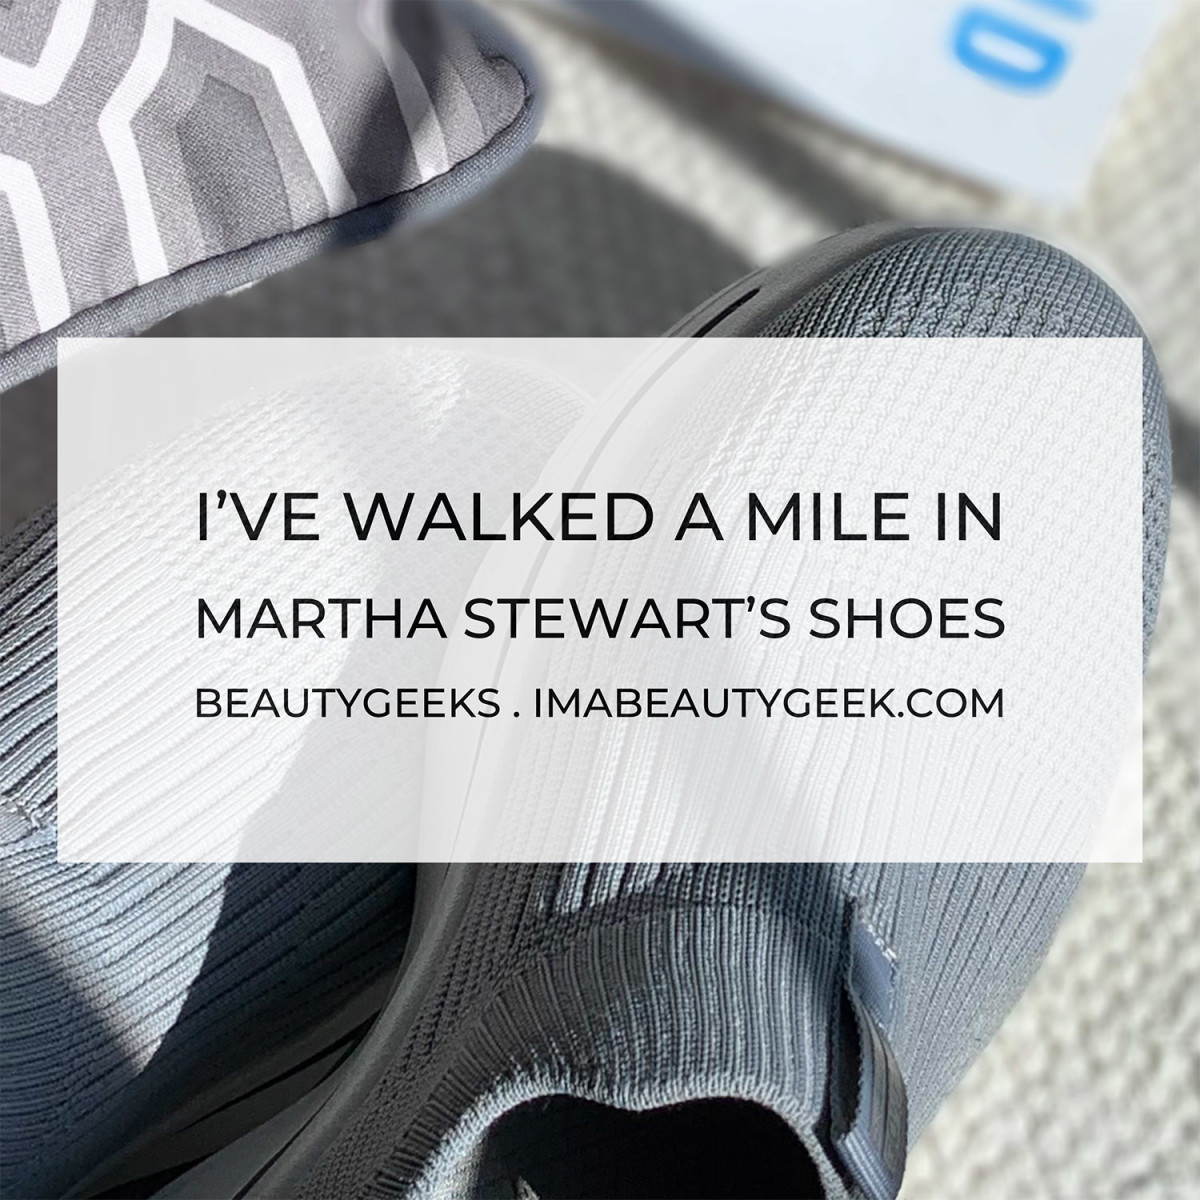 I've walked a mile in Martha Stewart's shoes